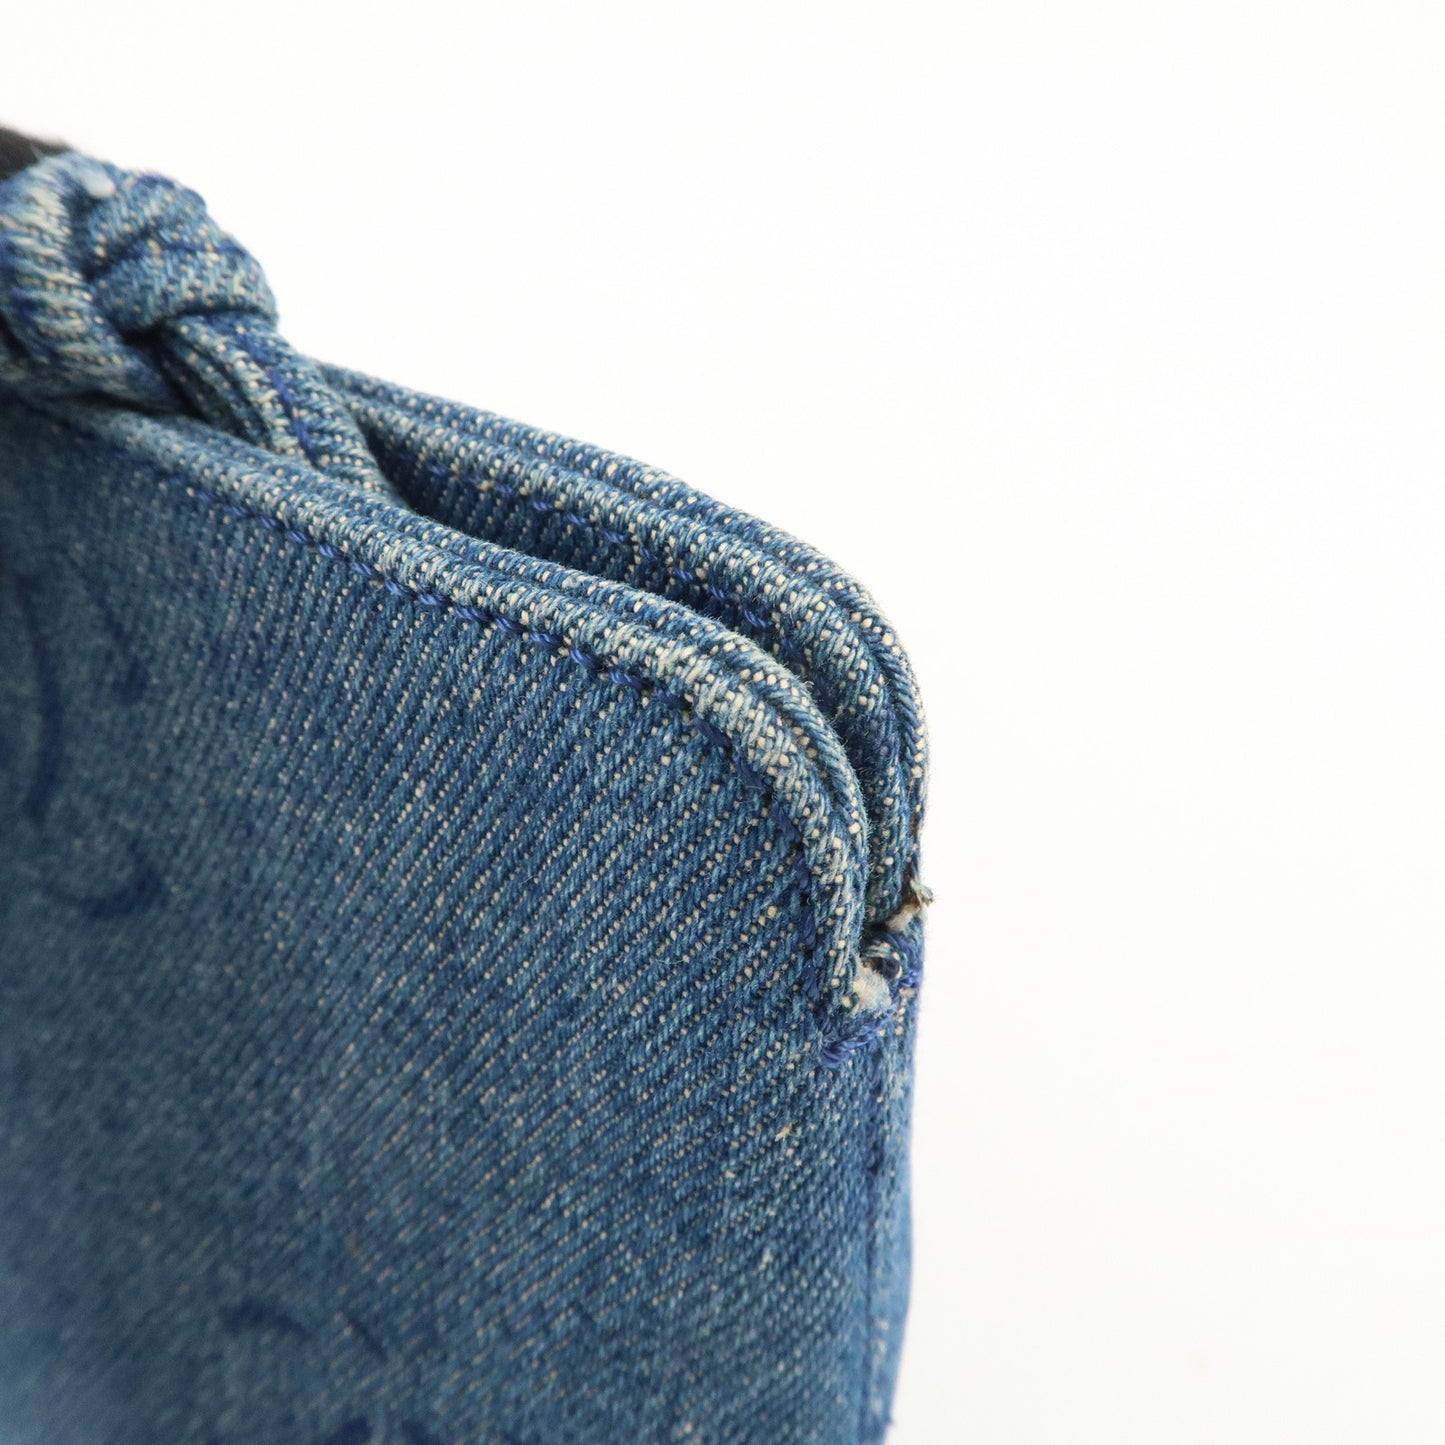 CHANEL Denim Pouch Cosmetic Pouch Clutch Bag Navy Blue